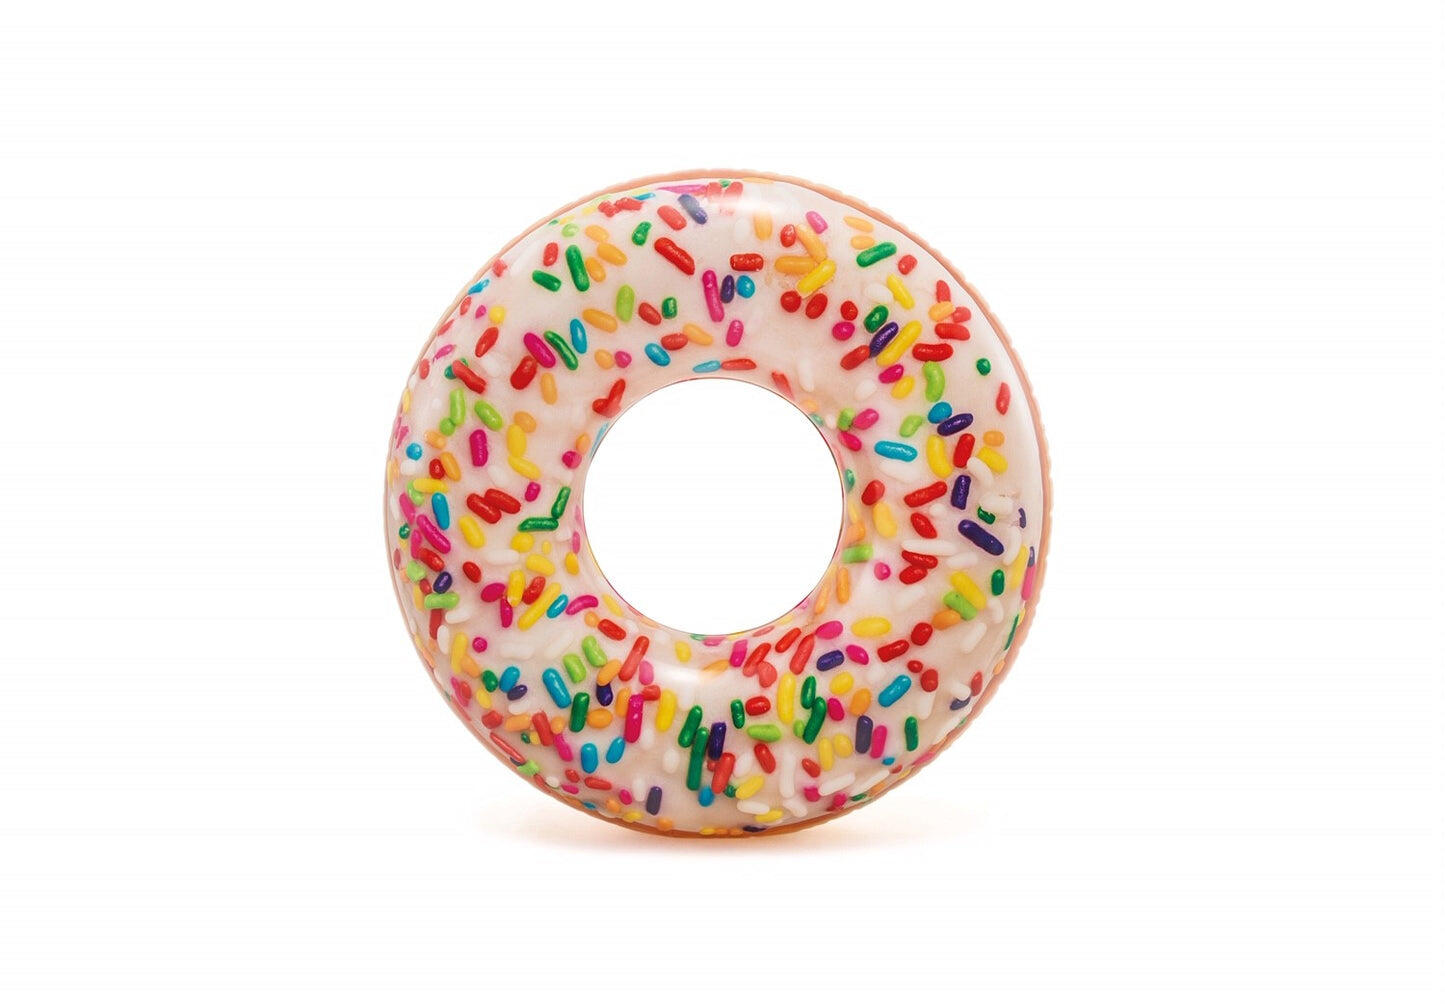 Sprinkle Donut Ring Pool Float